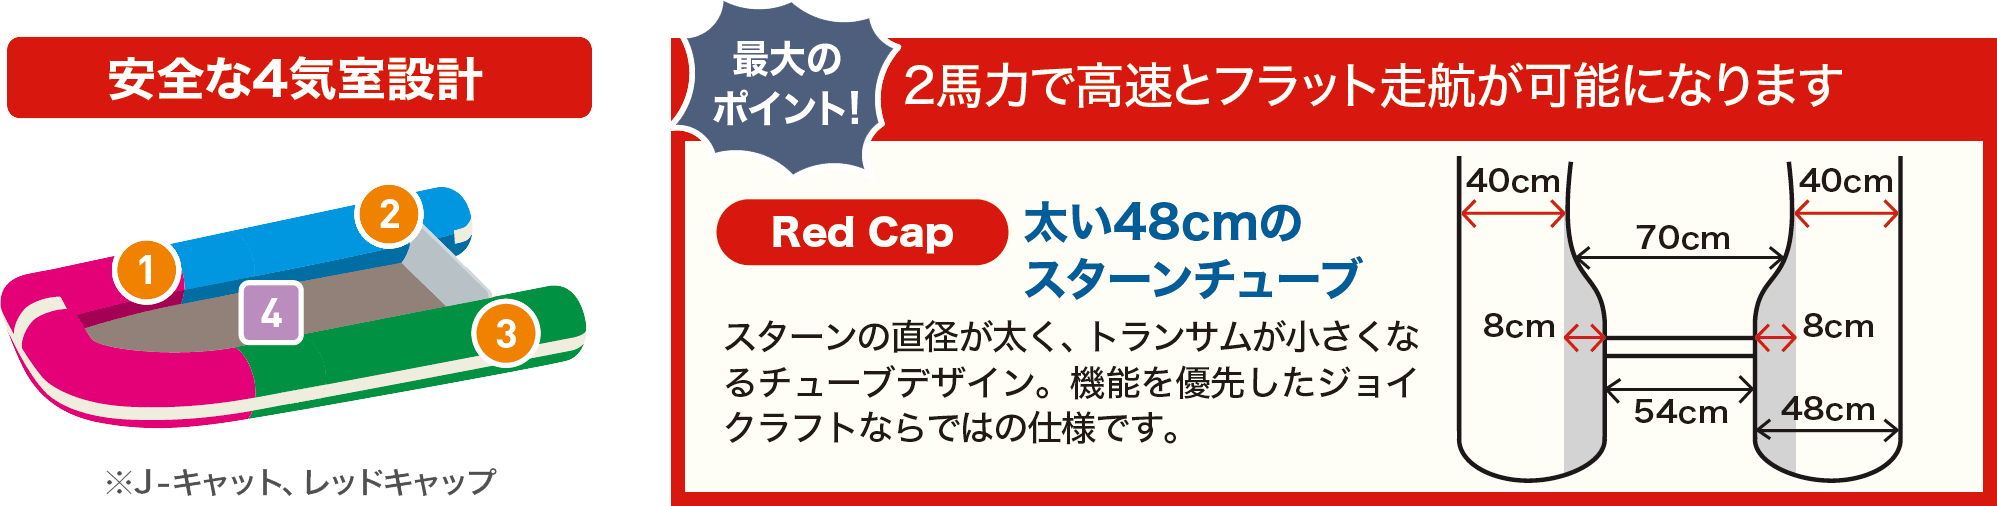 Red Cap | JOYCRAFT WEB SHOP Produced by 東京夢の島マリーナDics